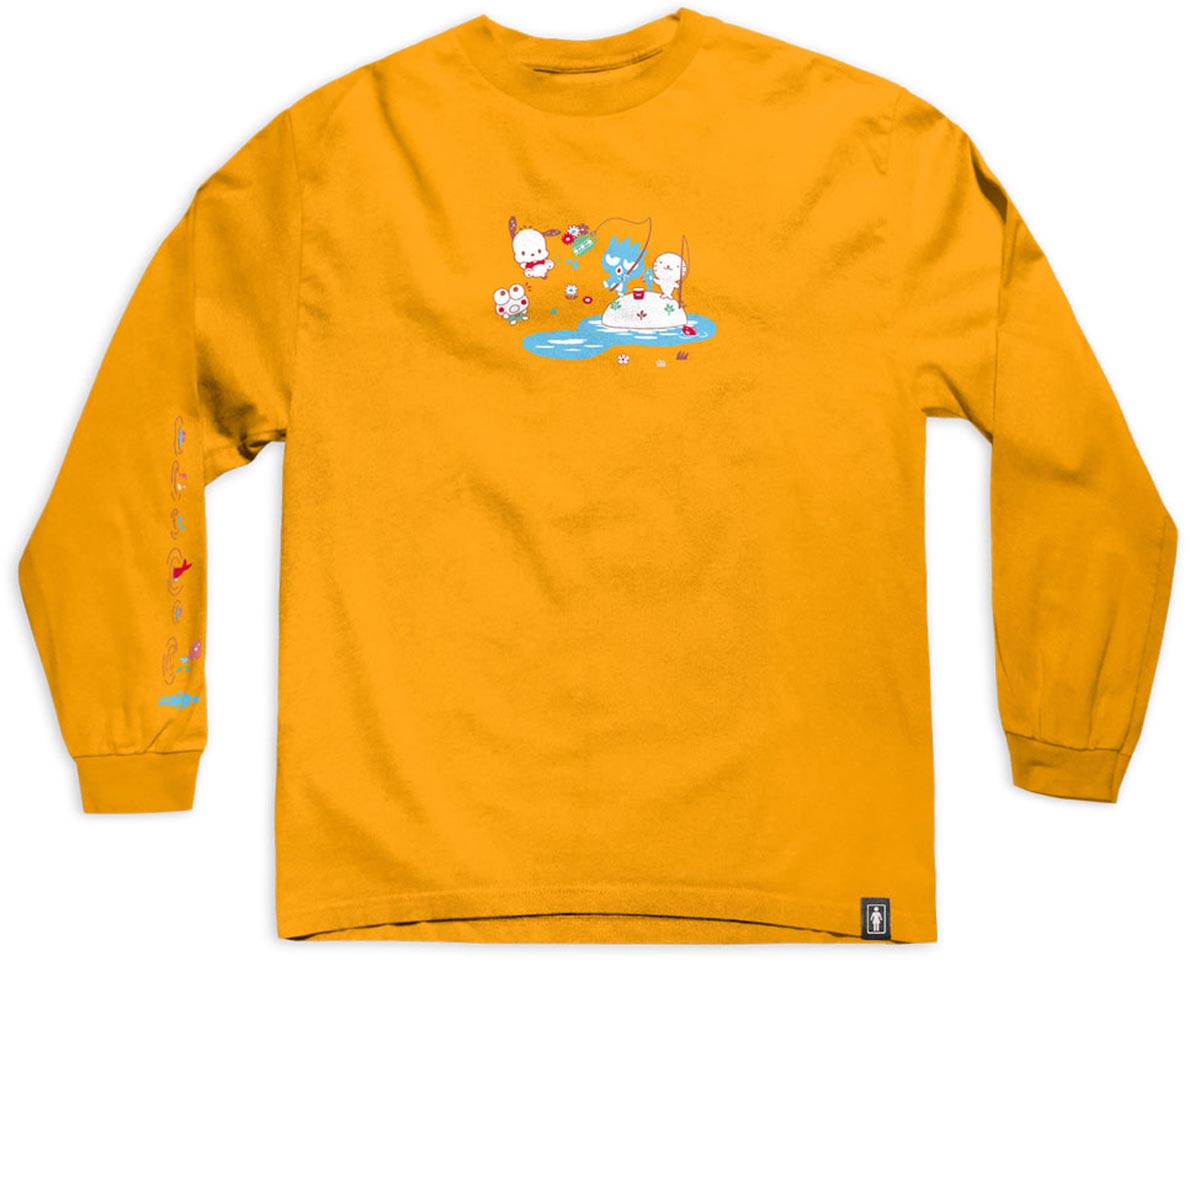 Girl x Hello Kitty Fishing Long Sleeve T-Shirt - Gold image 1